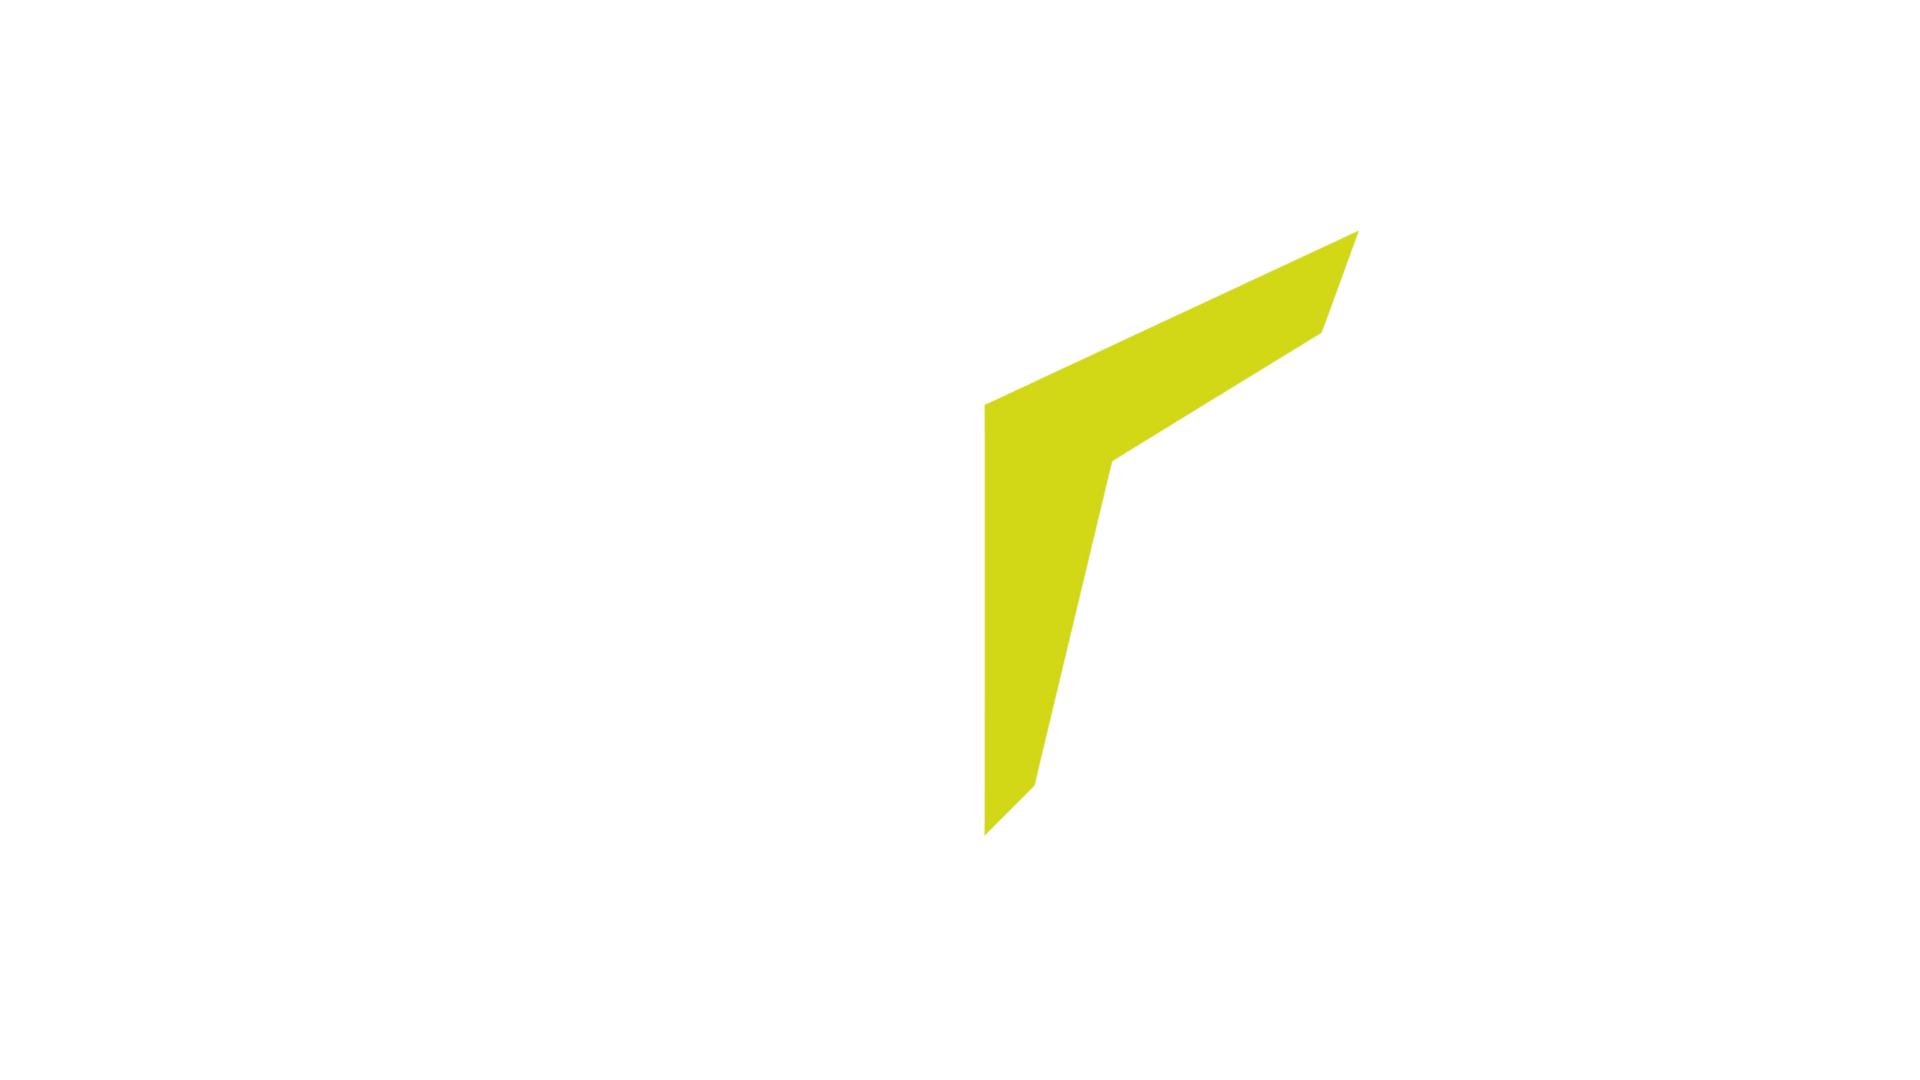 TITAN ZONE